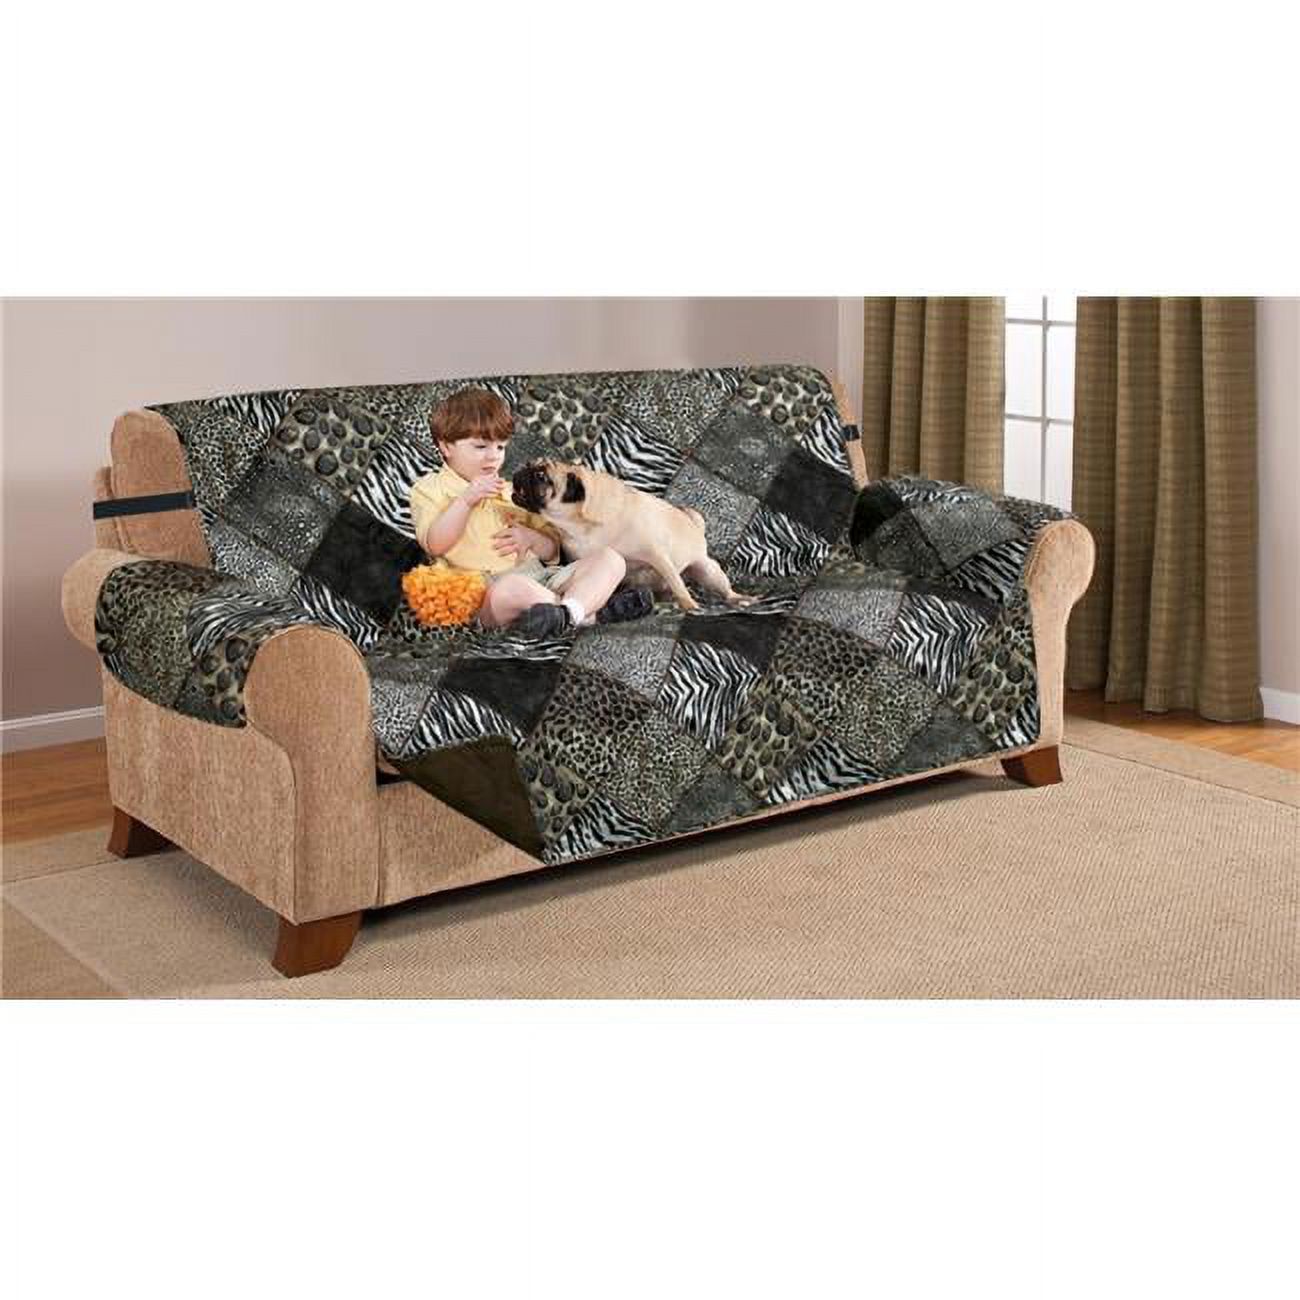 212 Main 904590 Sofa Furniture Protector - Safari - image 1 of 2